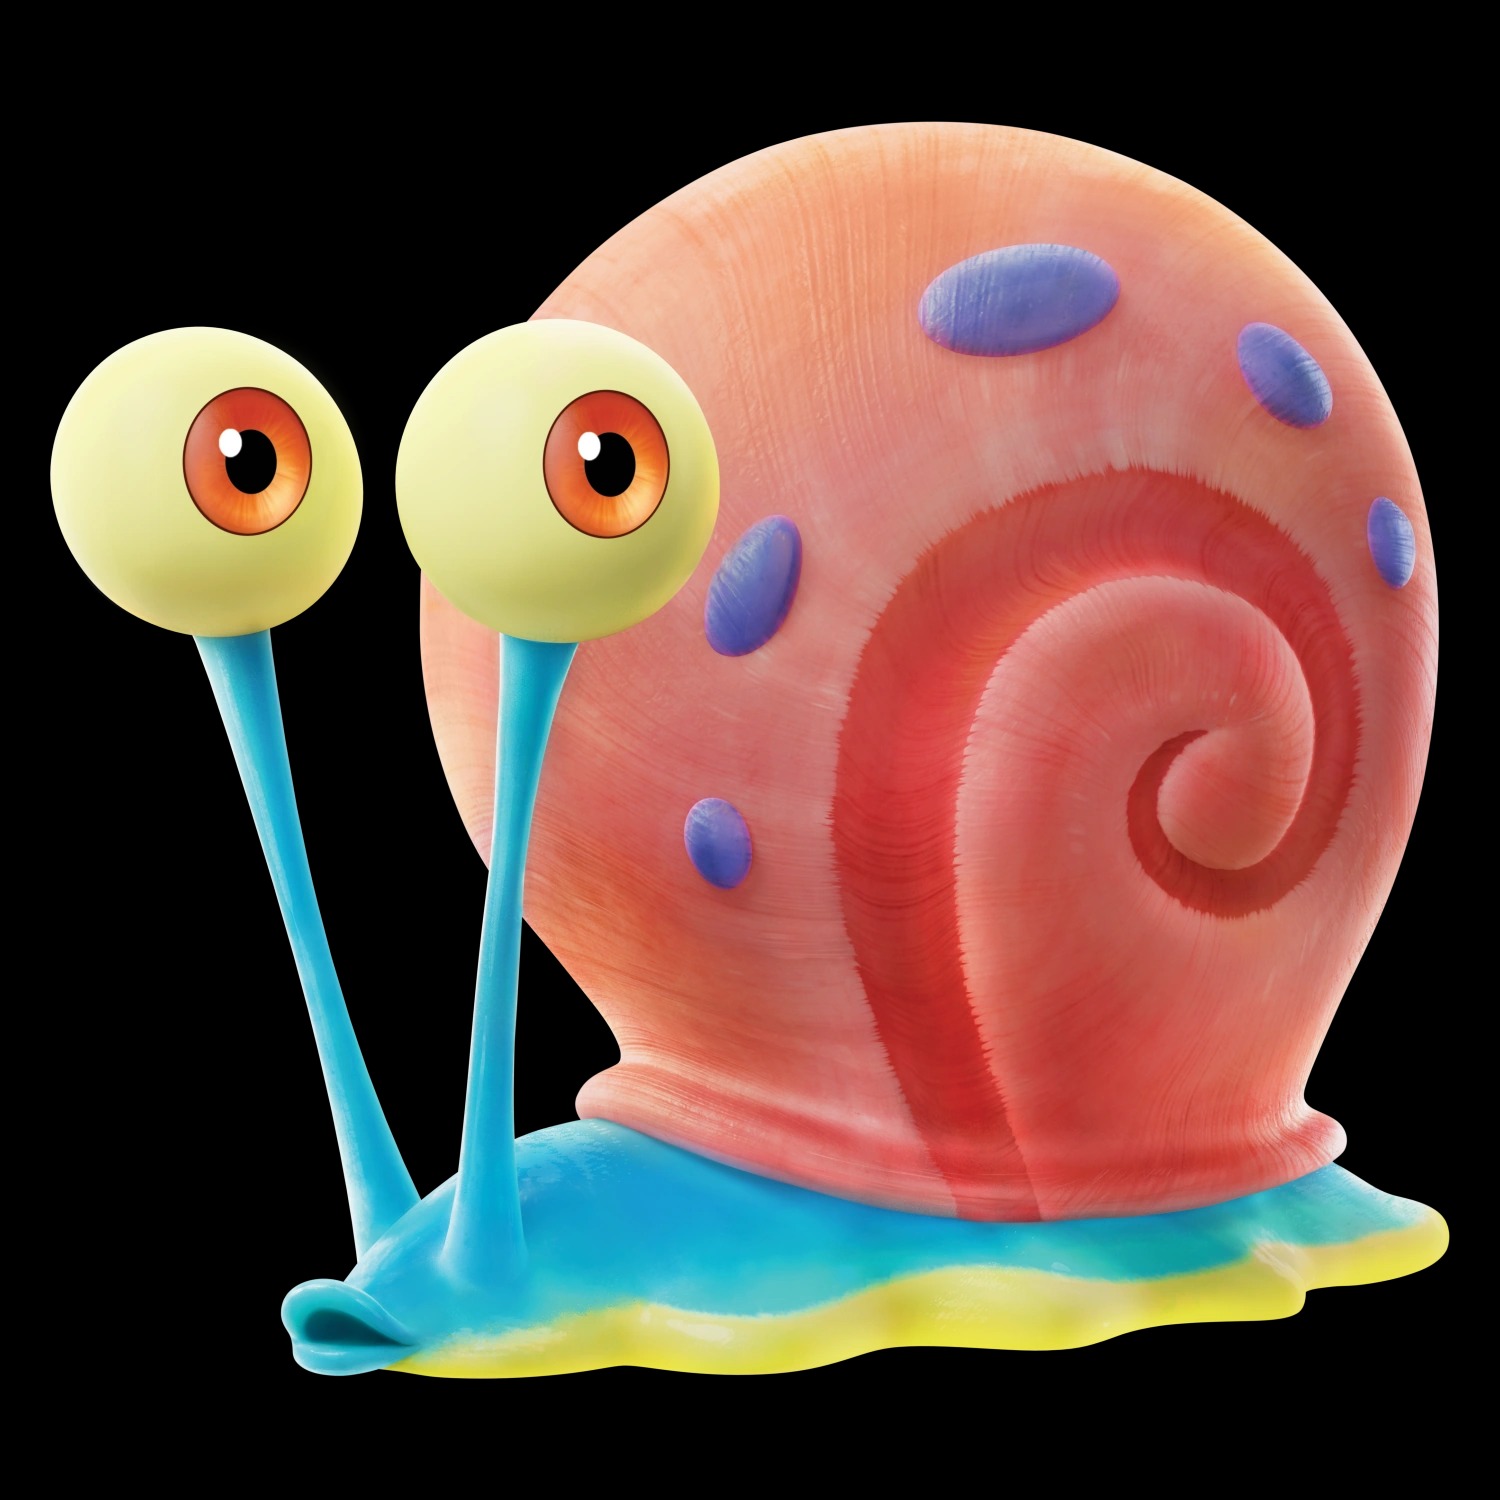 22-facts-about-gary-the-snail-spongebob-squarepants